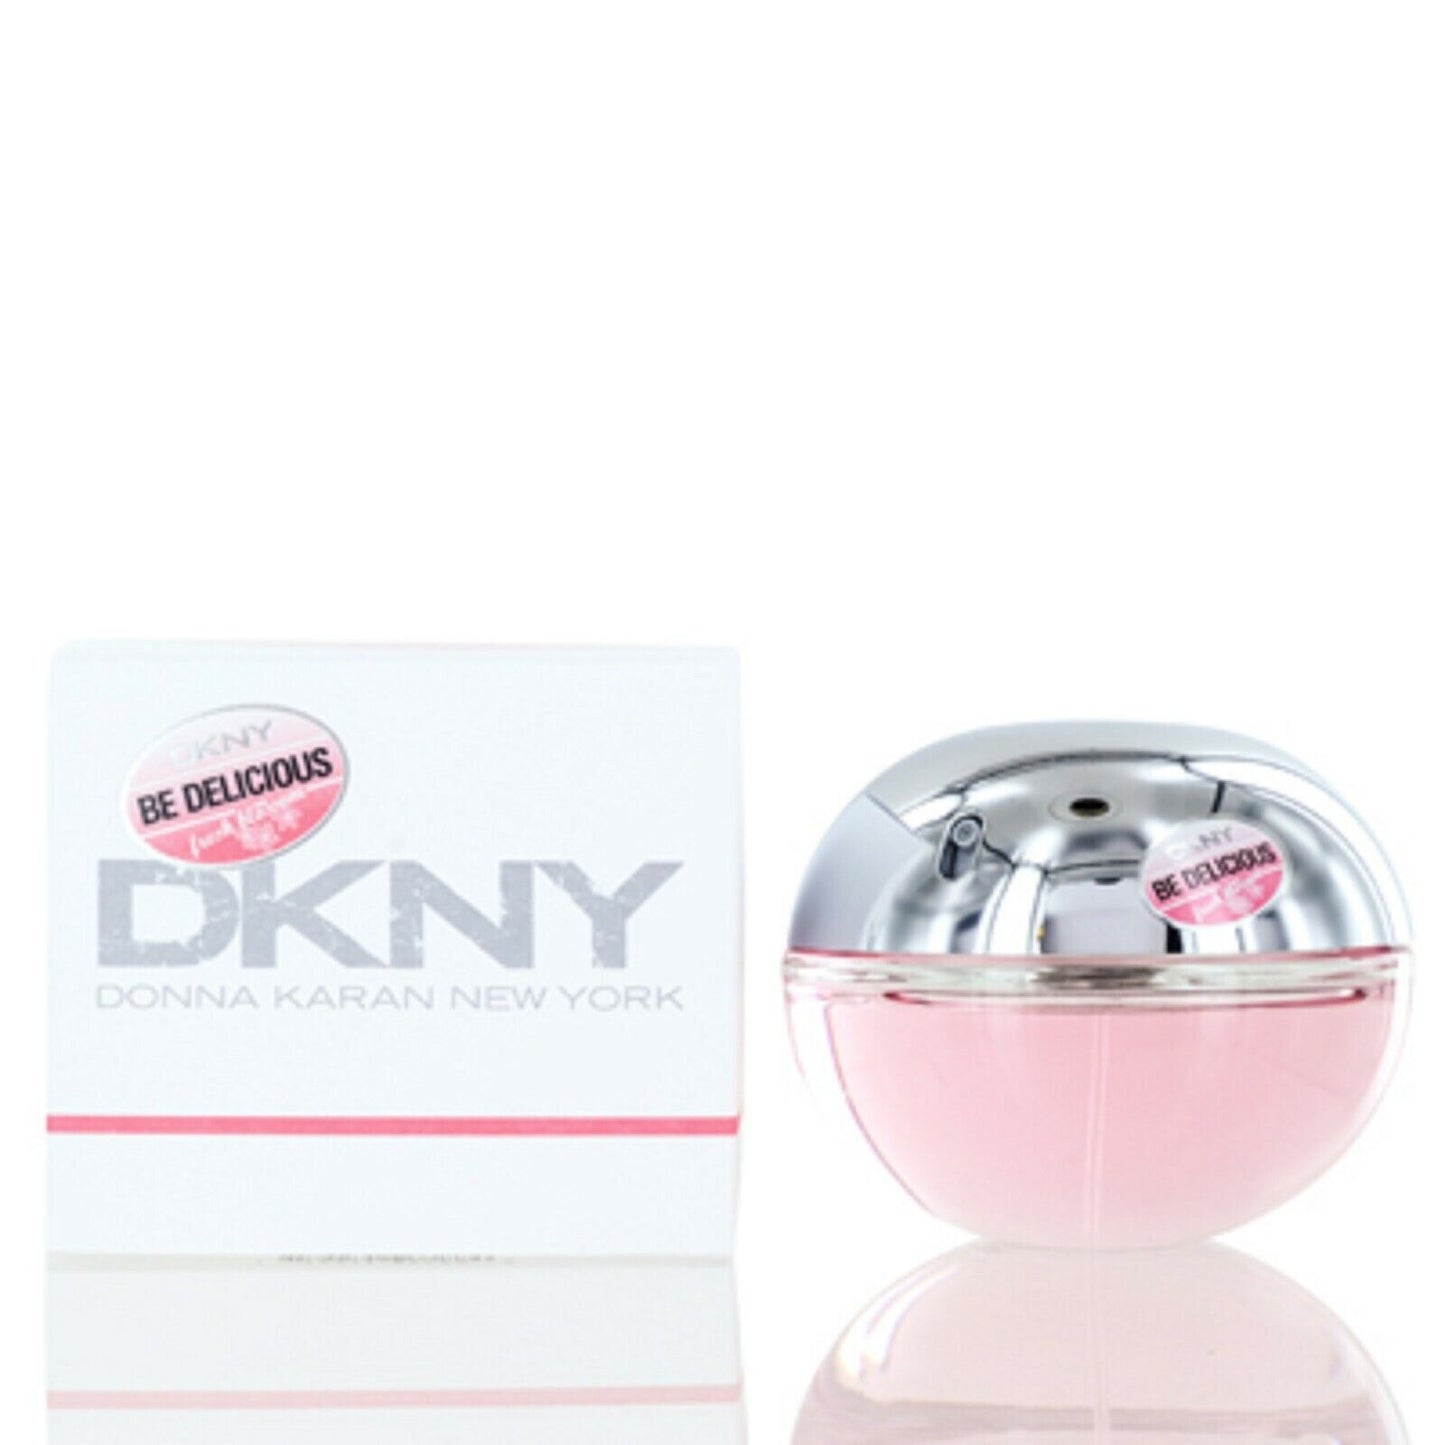 DKNY Be Delicious Fresh Blossom Donna Karan for women 3.4oz Edp